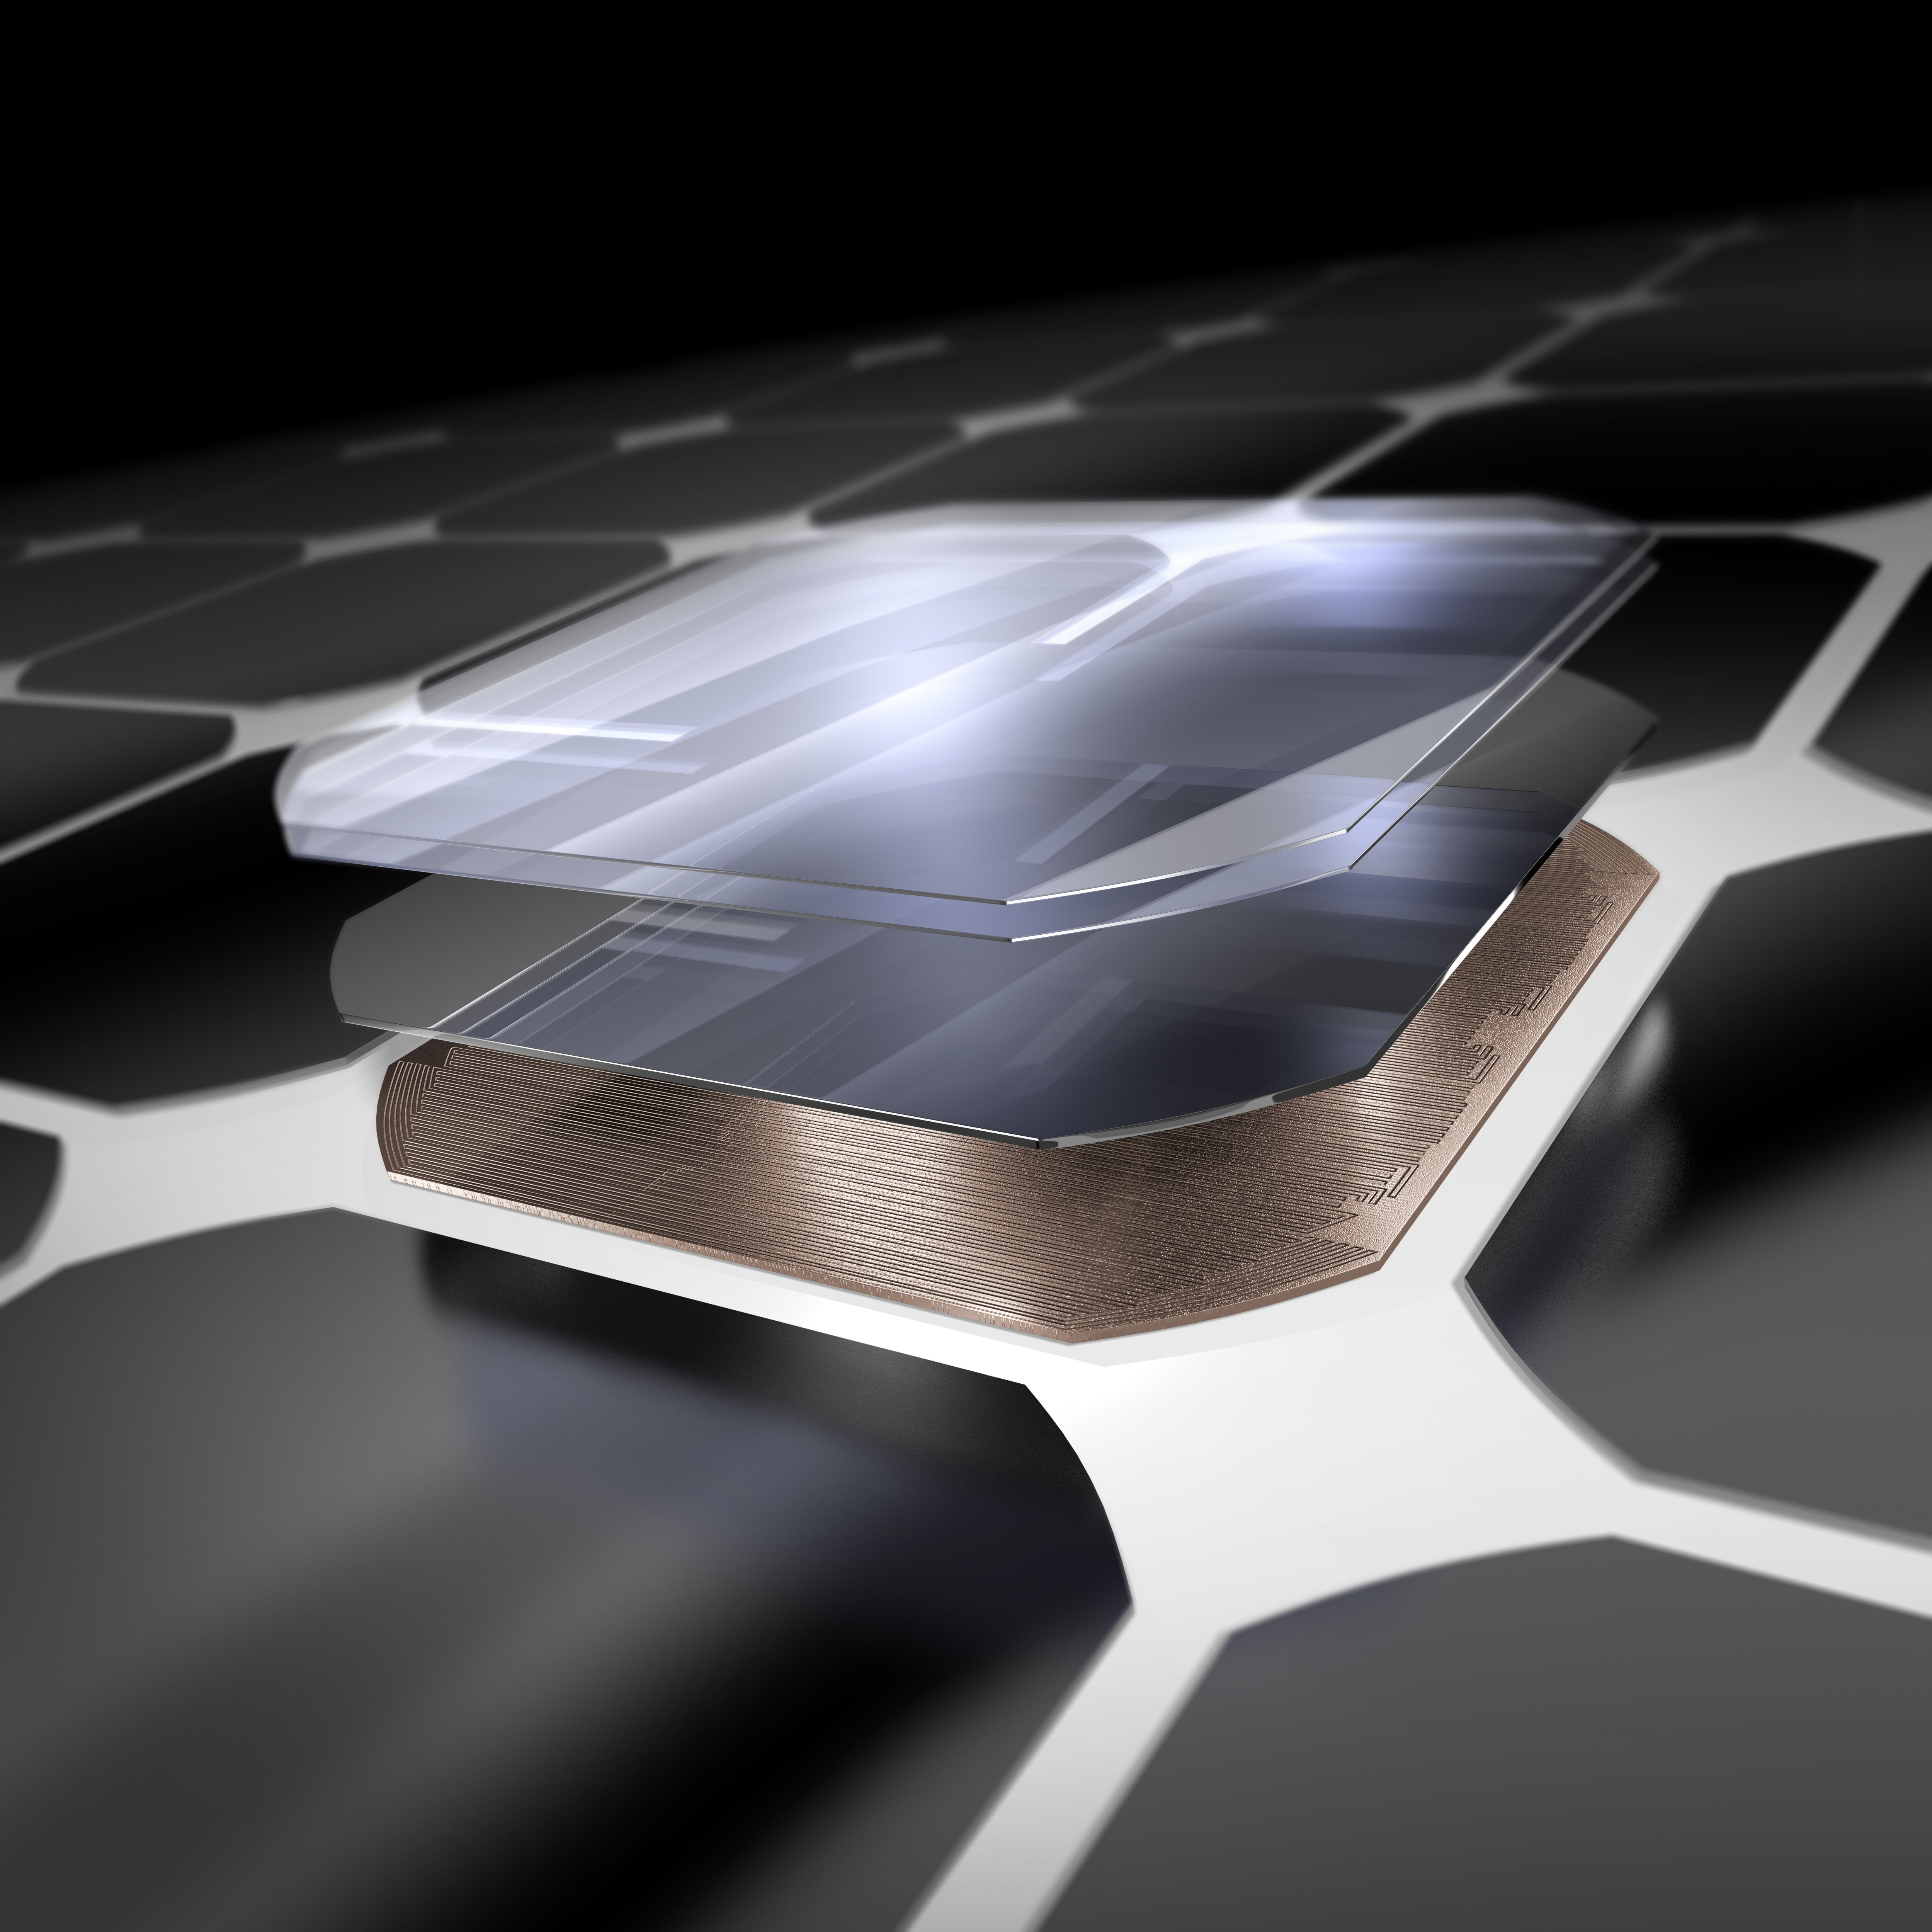 SunPower's Maxeon solar cell